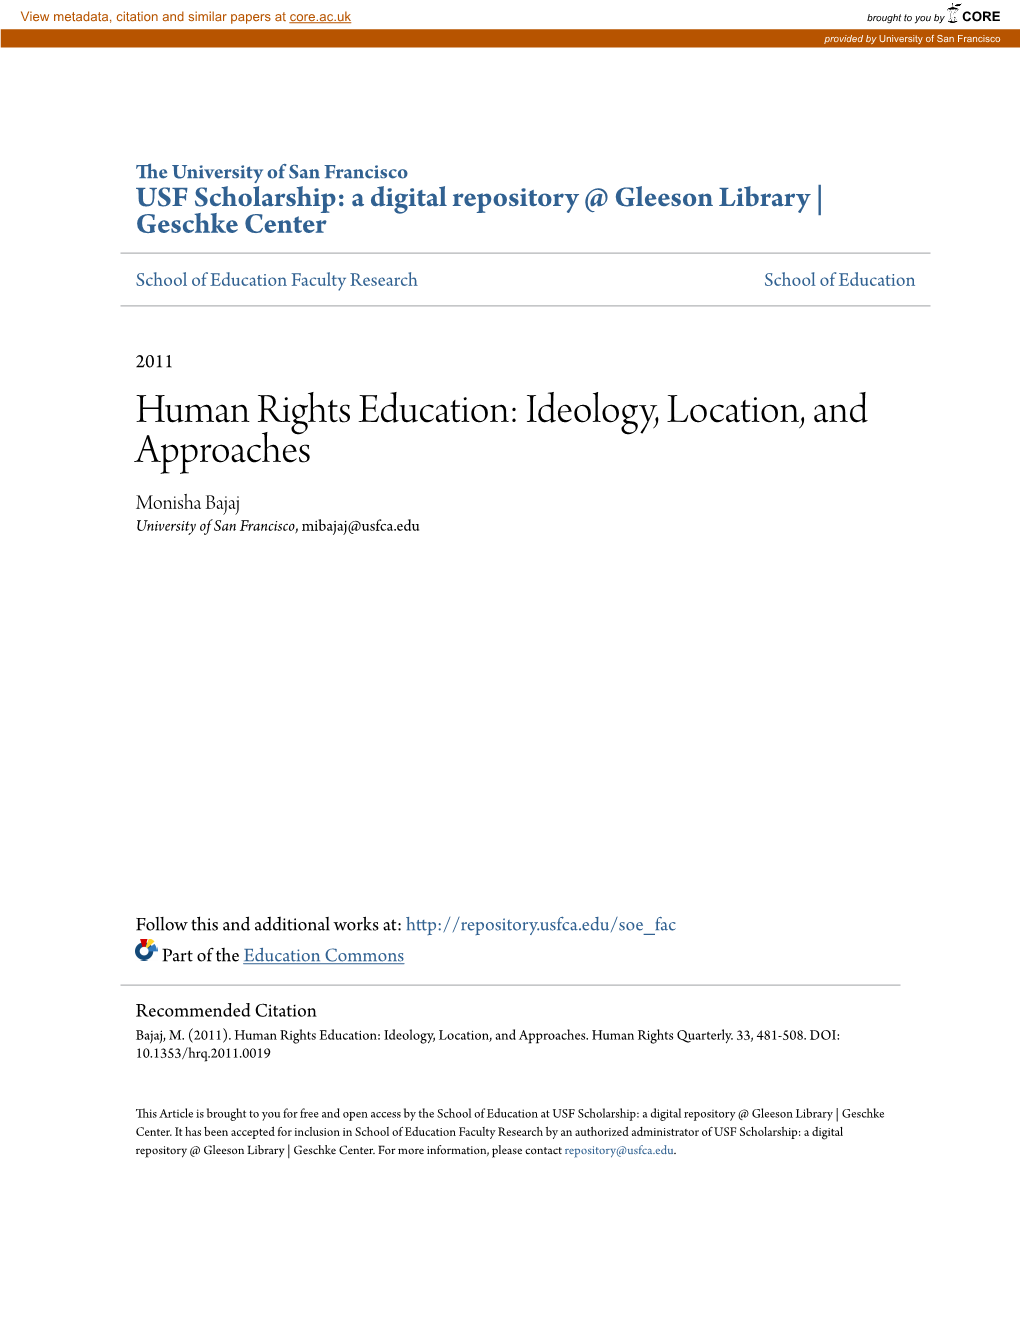 Human Rights Education: Ideology, Location, and Approaches Monisha Bajaj University of San Francisco, Mibajaj@Usfca.Edu